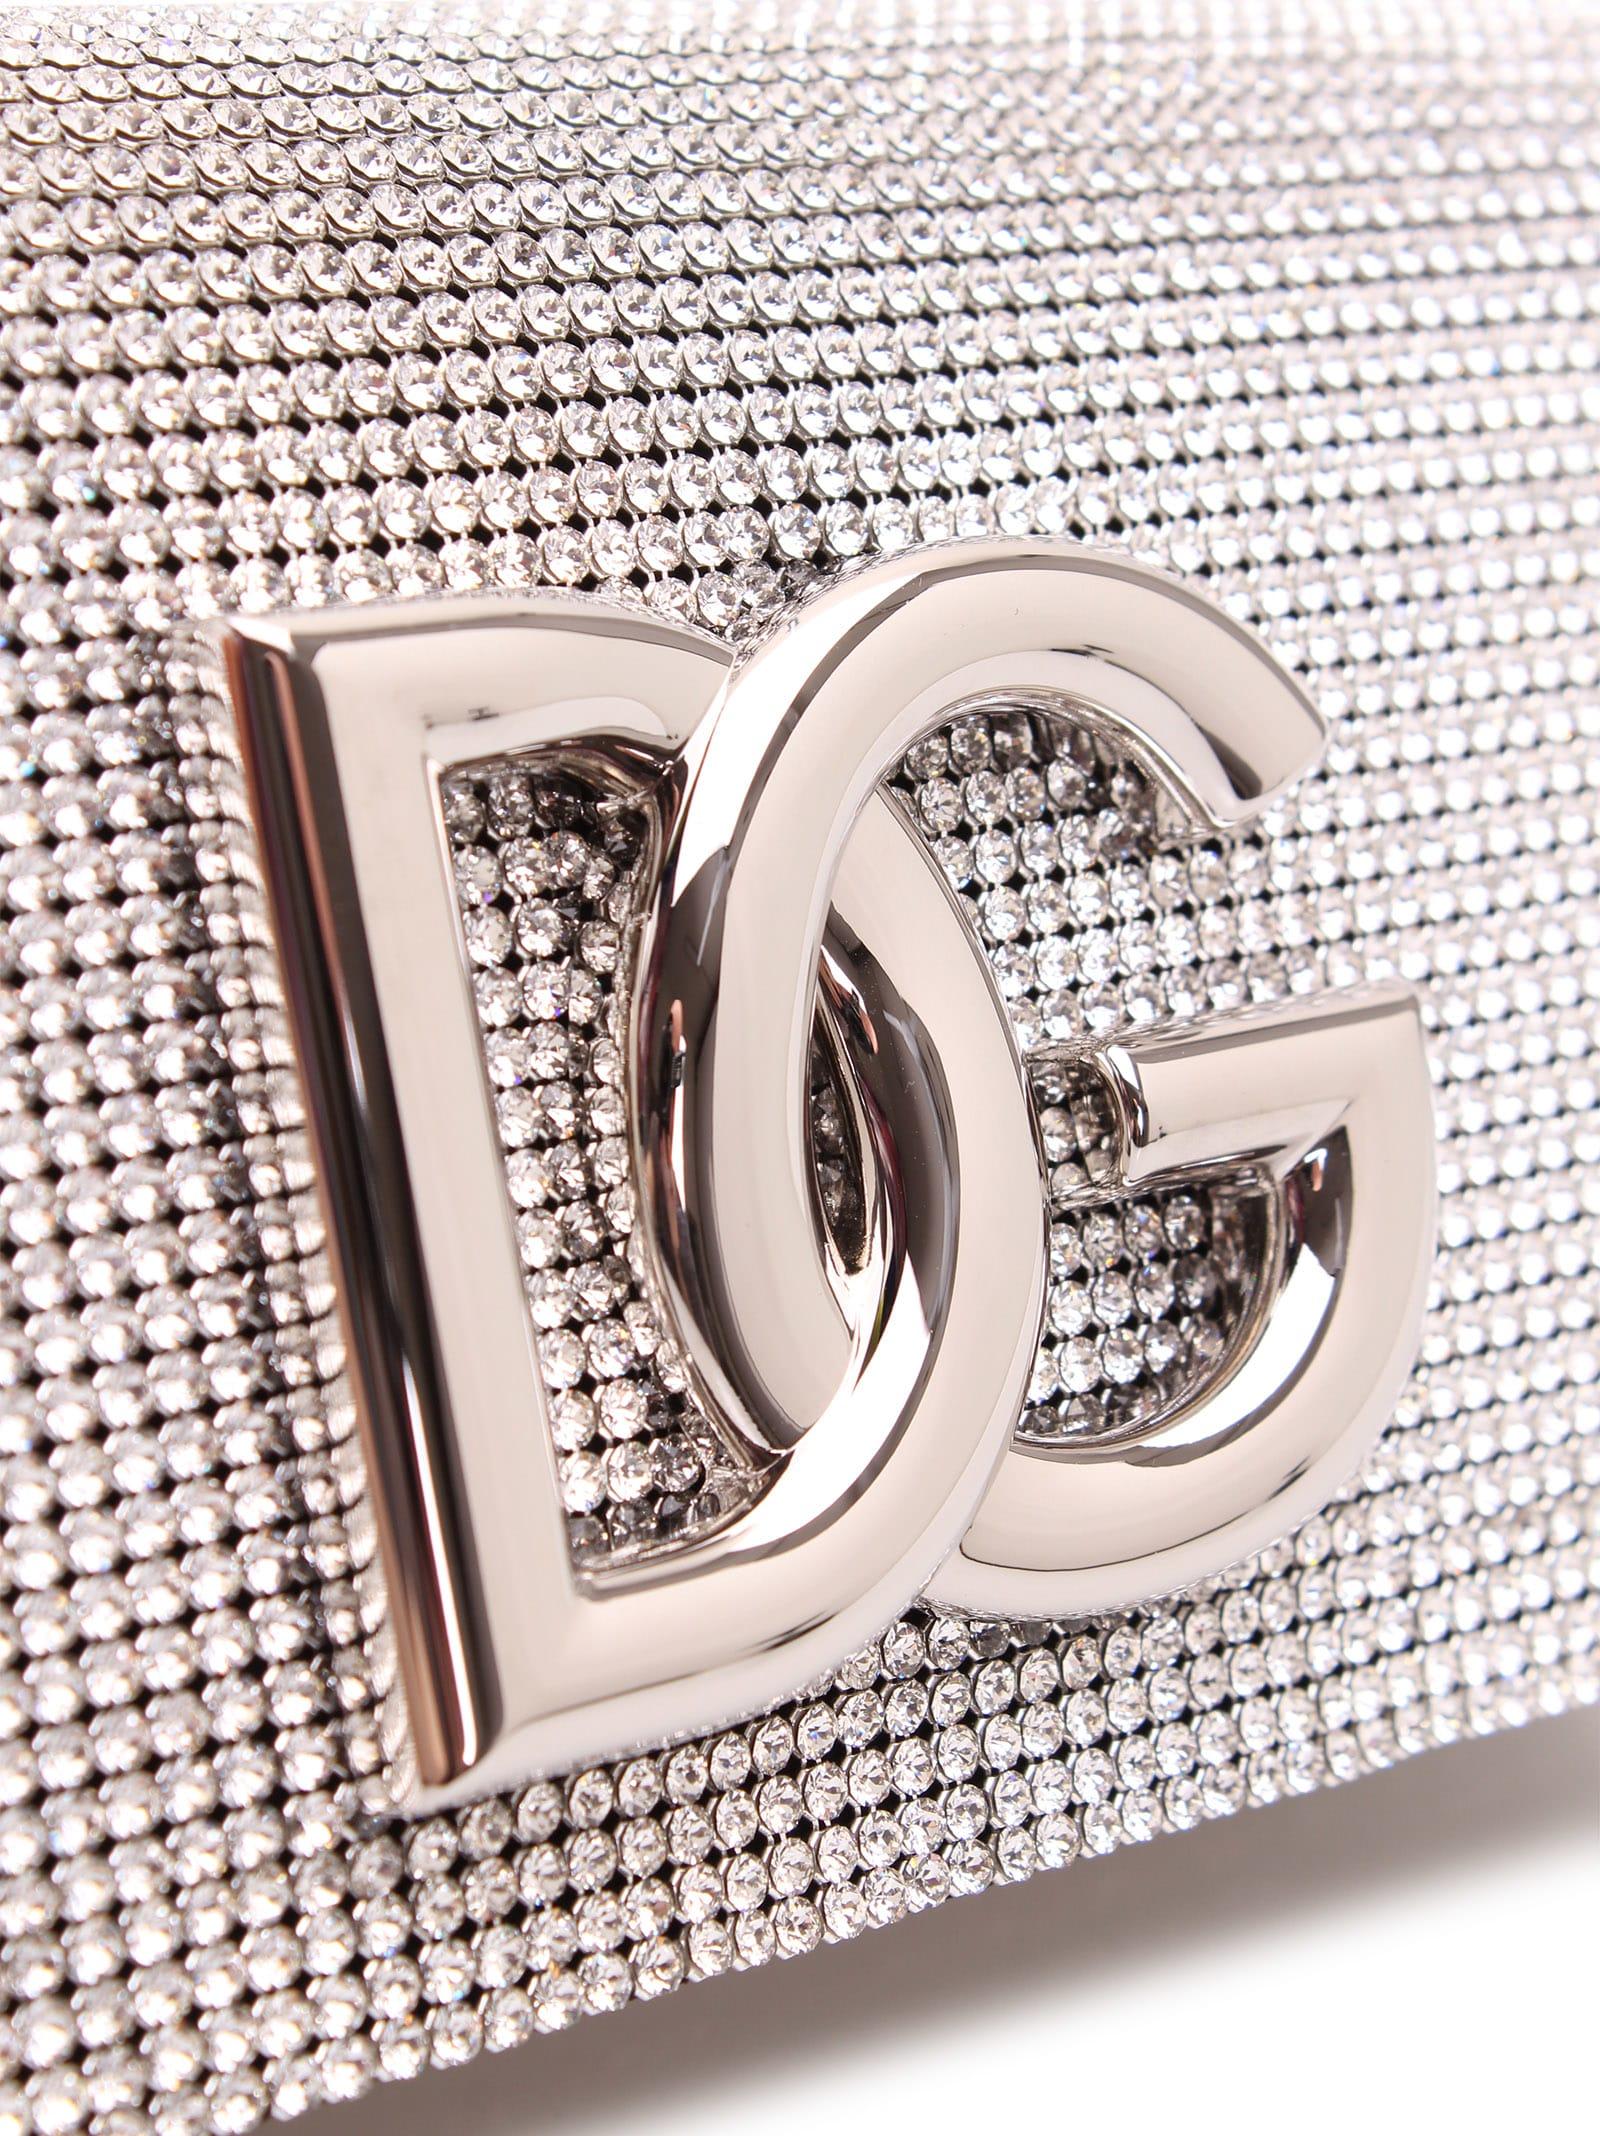 Dolce & Gabbana Crystal Mesh Dg Logo Clutch in Metallic